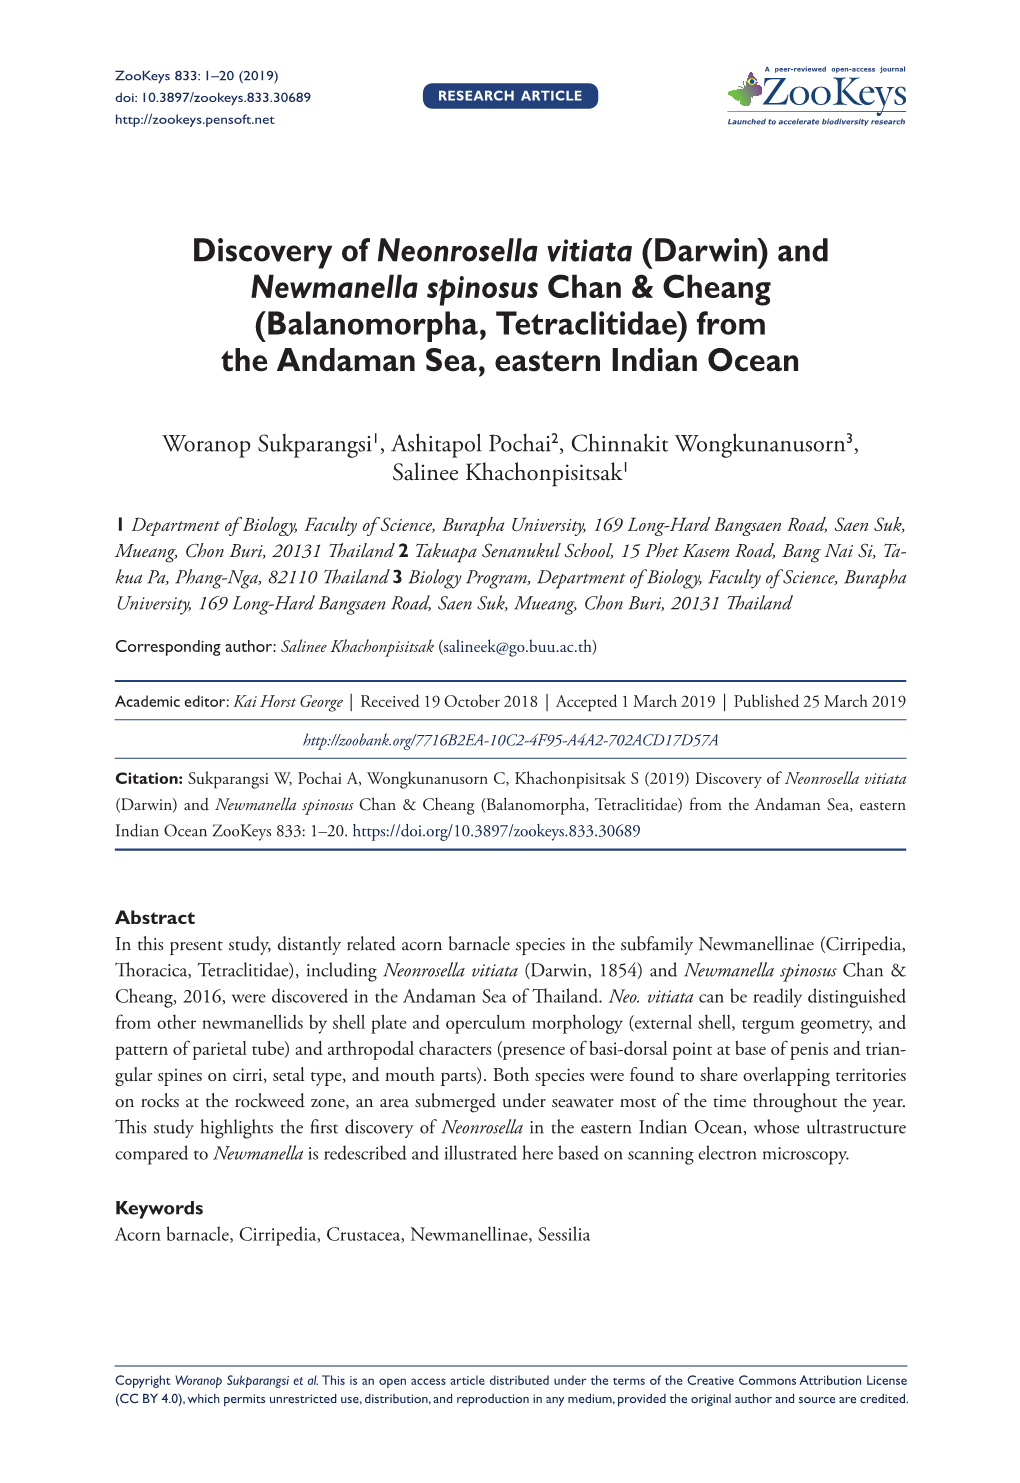 Discovery of Neonrosella Vitiata (Darwin) and Newmanella Spinosus Chan & Cheang (Balanomorpha, Tetraclitidae) from the Andaman Sea, Eastern Indian Ocean